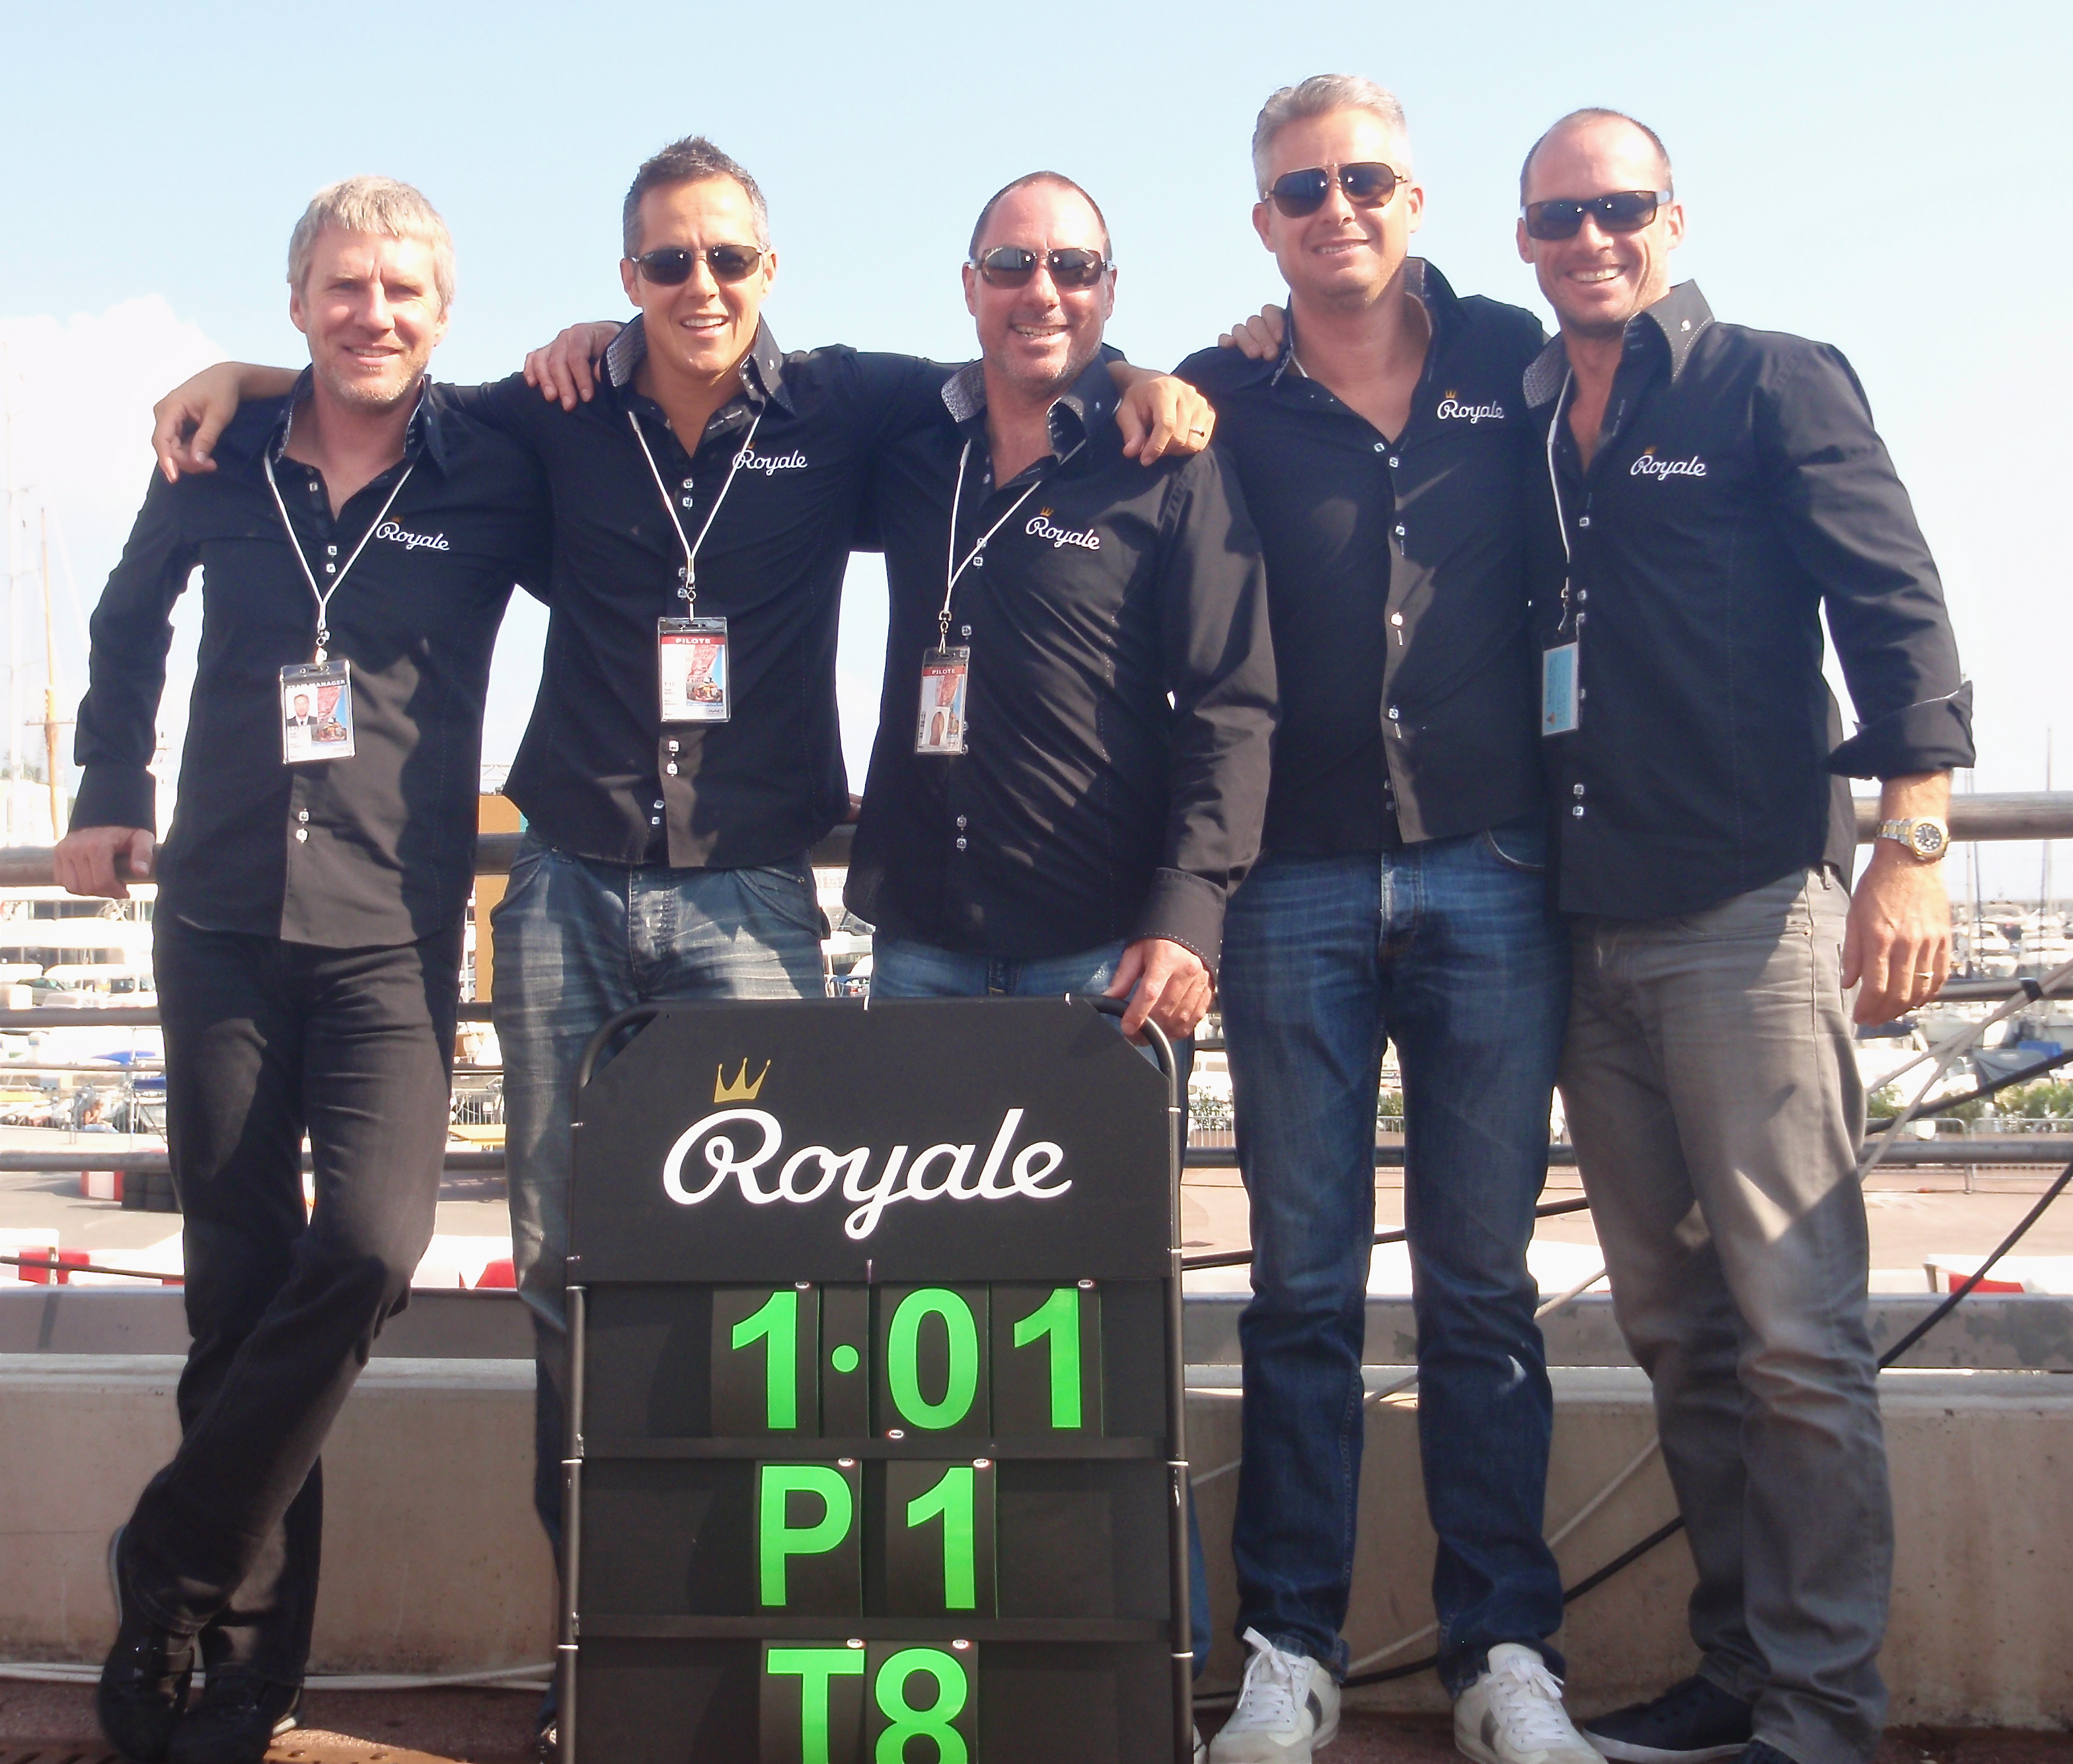 Monaco Kart Cup for Team Royale